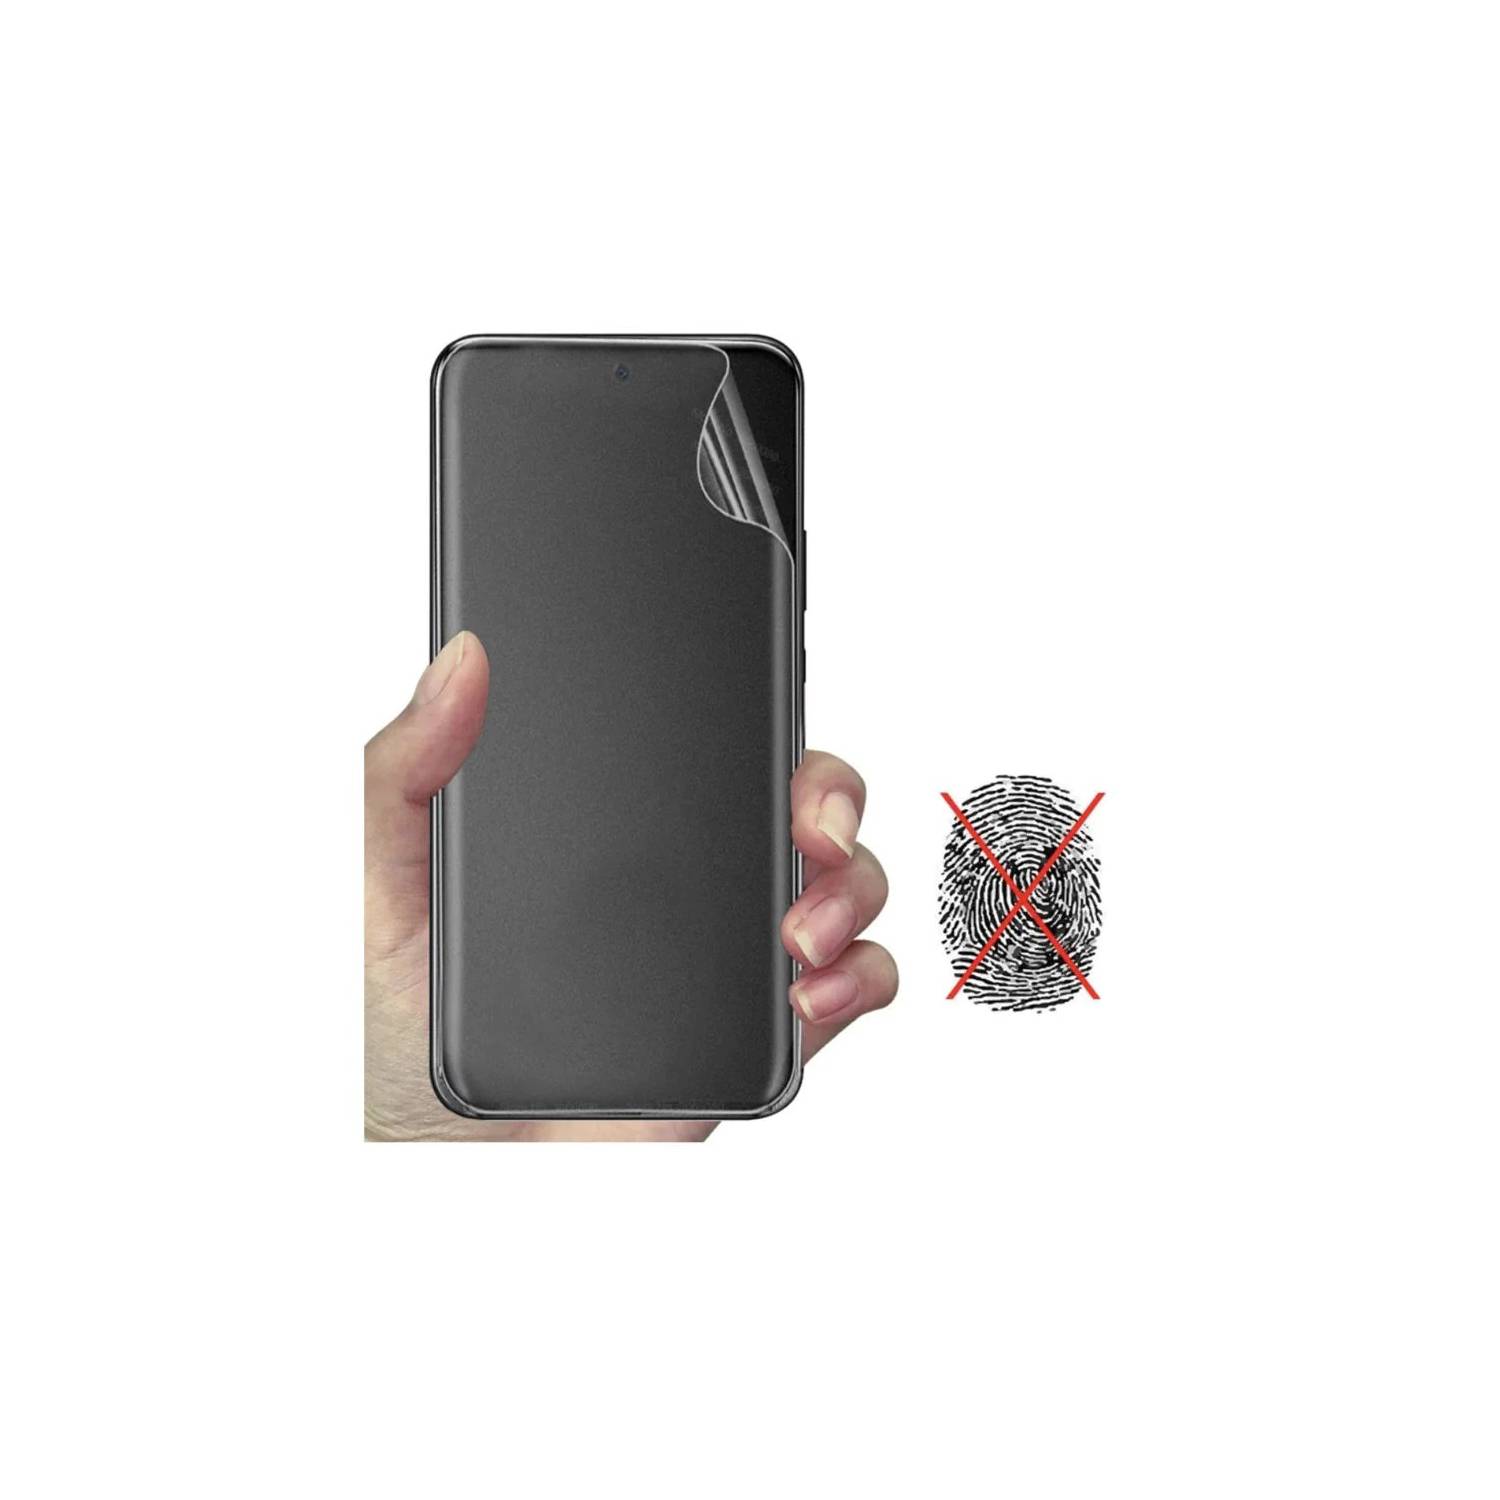 Protector Pantalla Xiaomi Redmi Note 12 (4g) Hidrogel Antiarañazos Tpu con  Ofertas en Carrefour